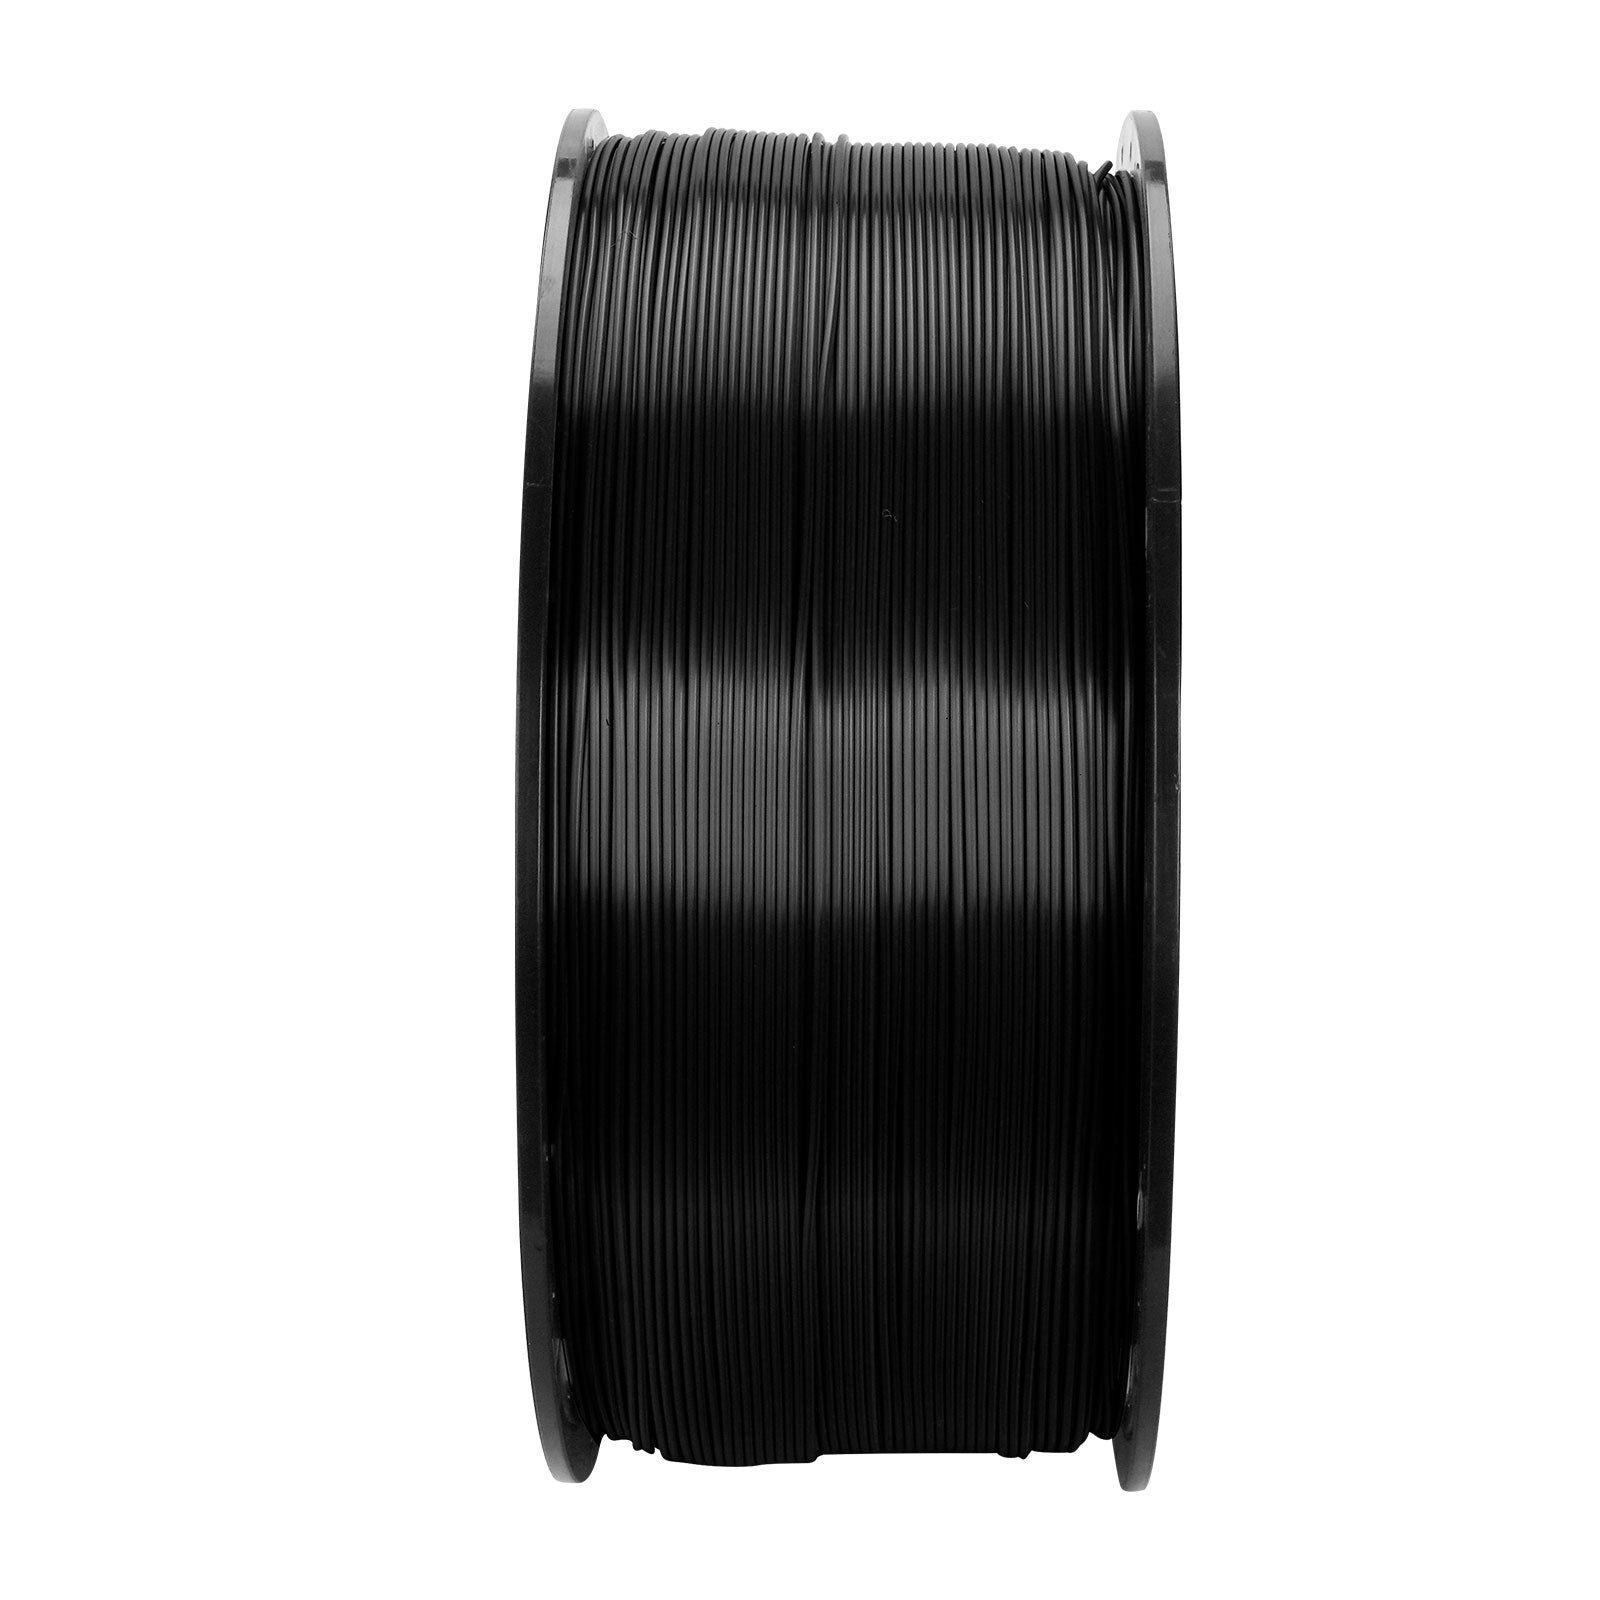 ERYONE PLA 3D Printer Filament 1.75mm, Dimensional Accuracy +/- 0.05 mm 3kg (2.2LBS)/Spool